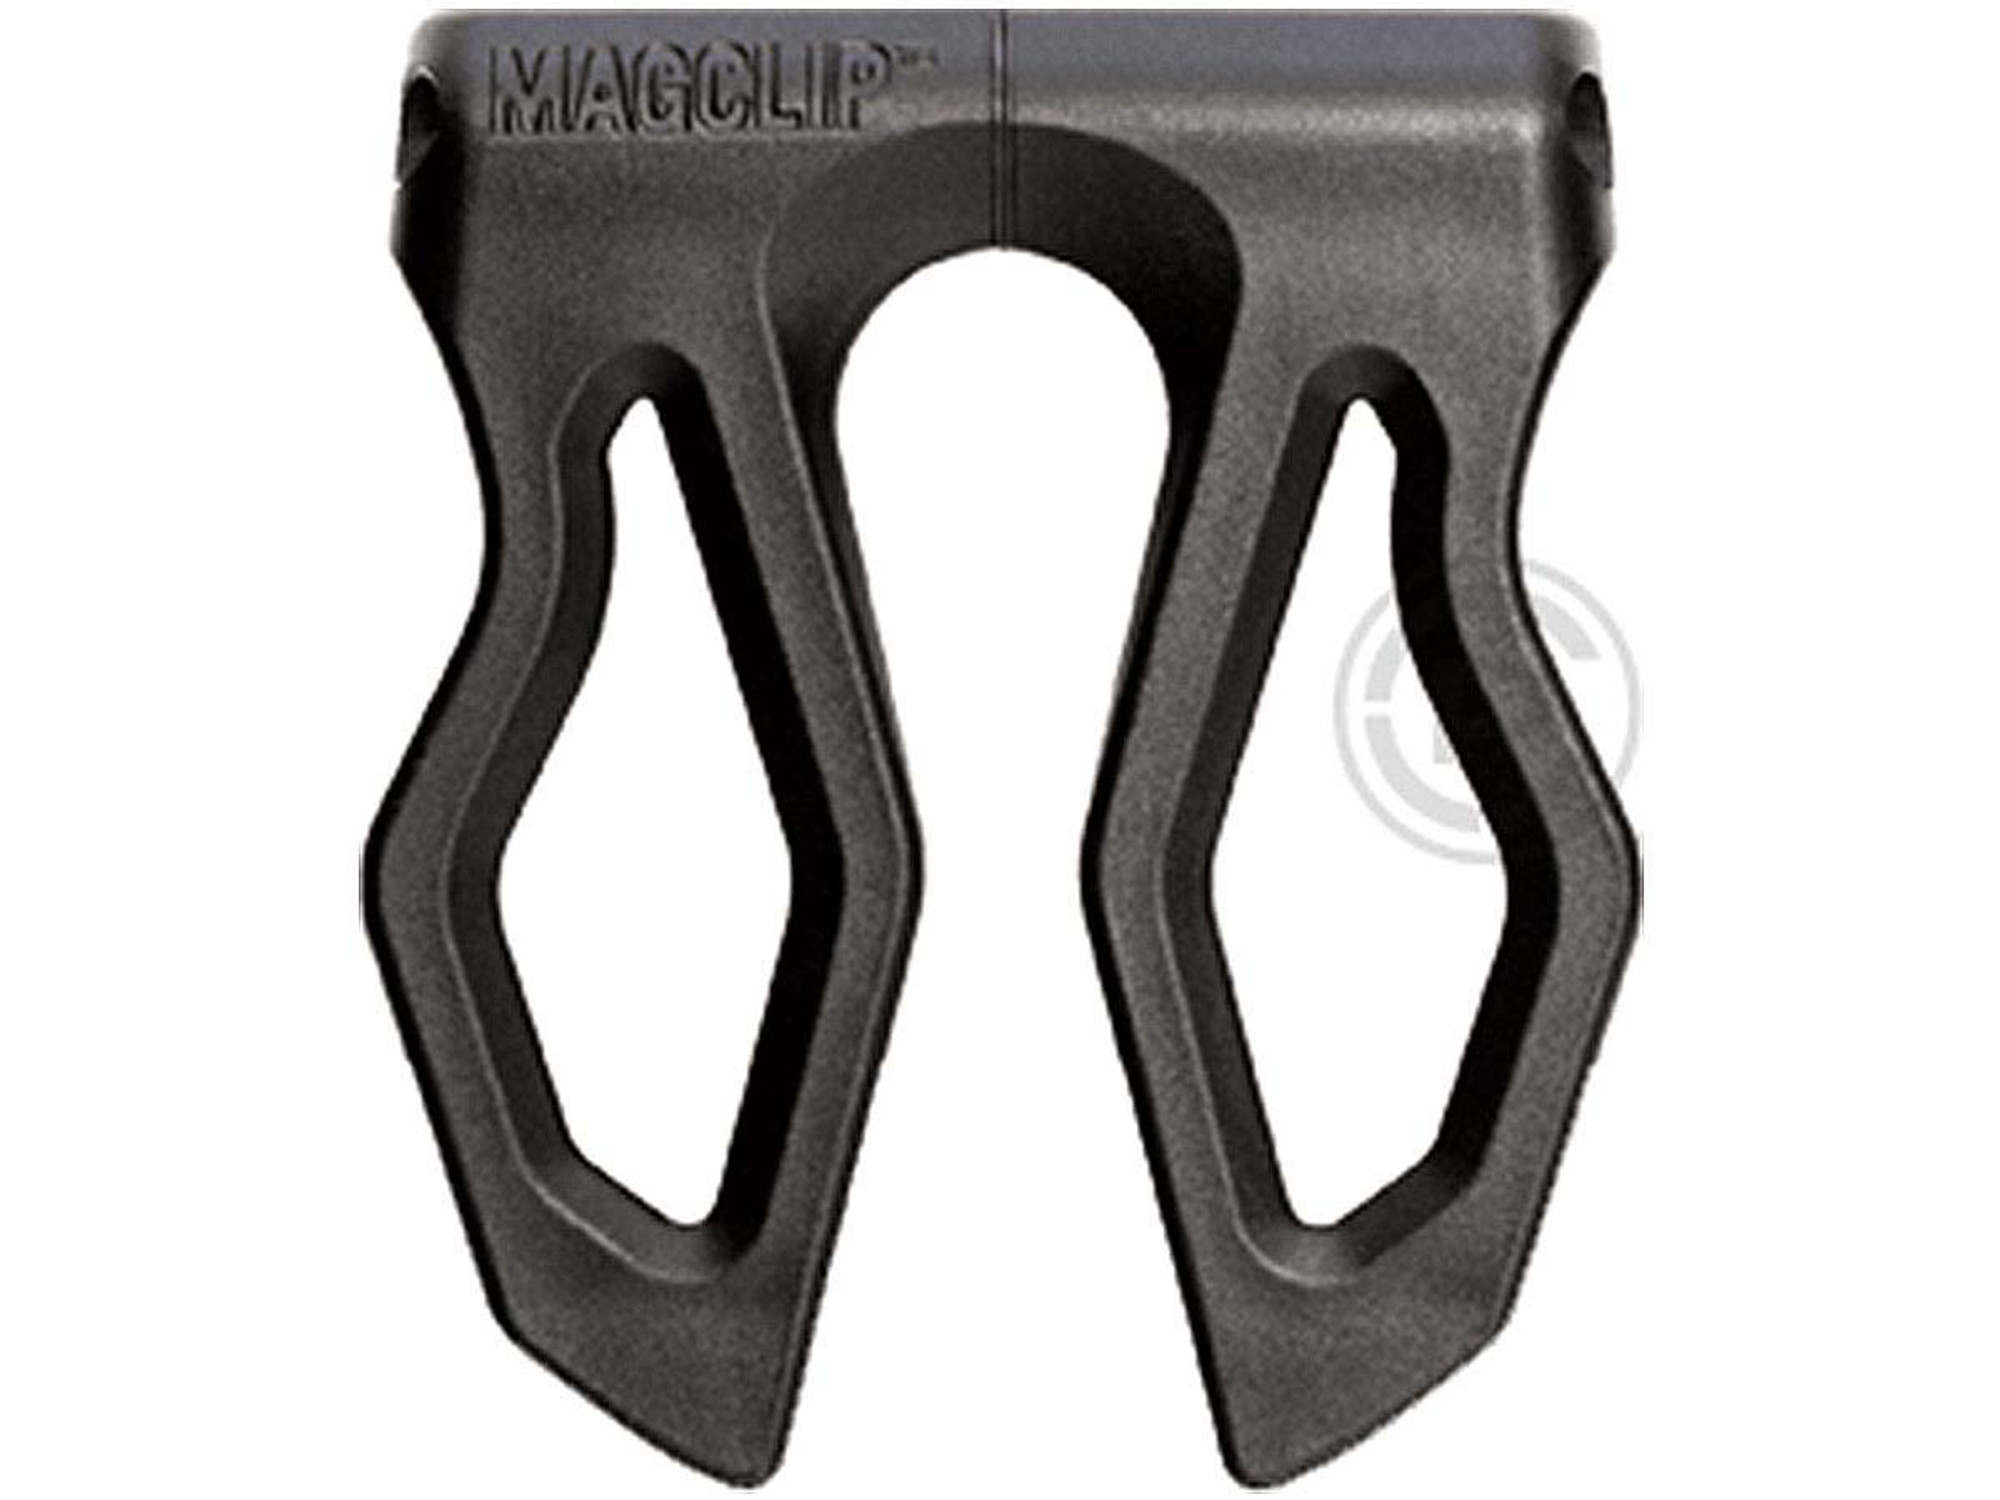 Crye Precision Mag Clip Magazine Retention Device - Set of 3 (Color: Black)